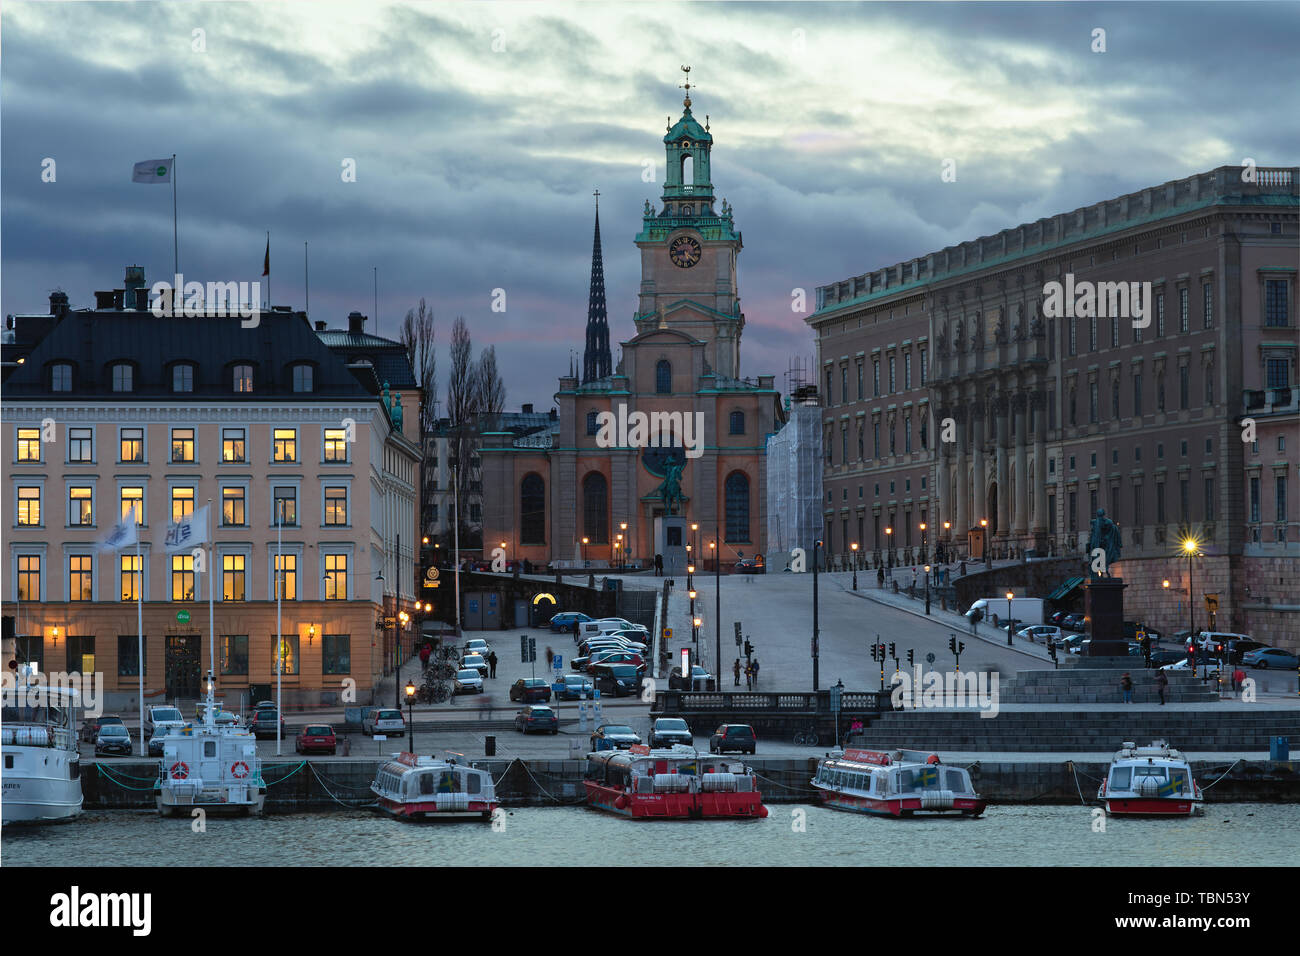 Slottsbacken, Stockholm in the evening Stock Photo